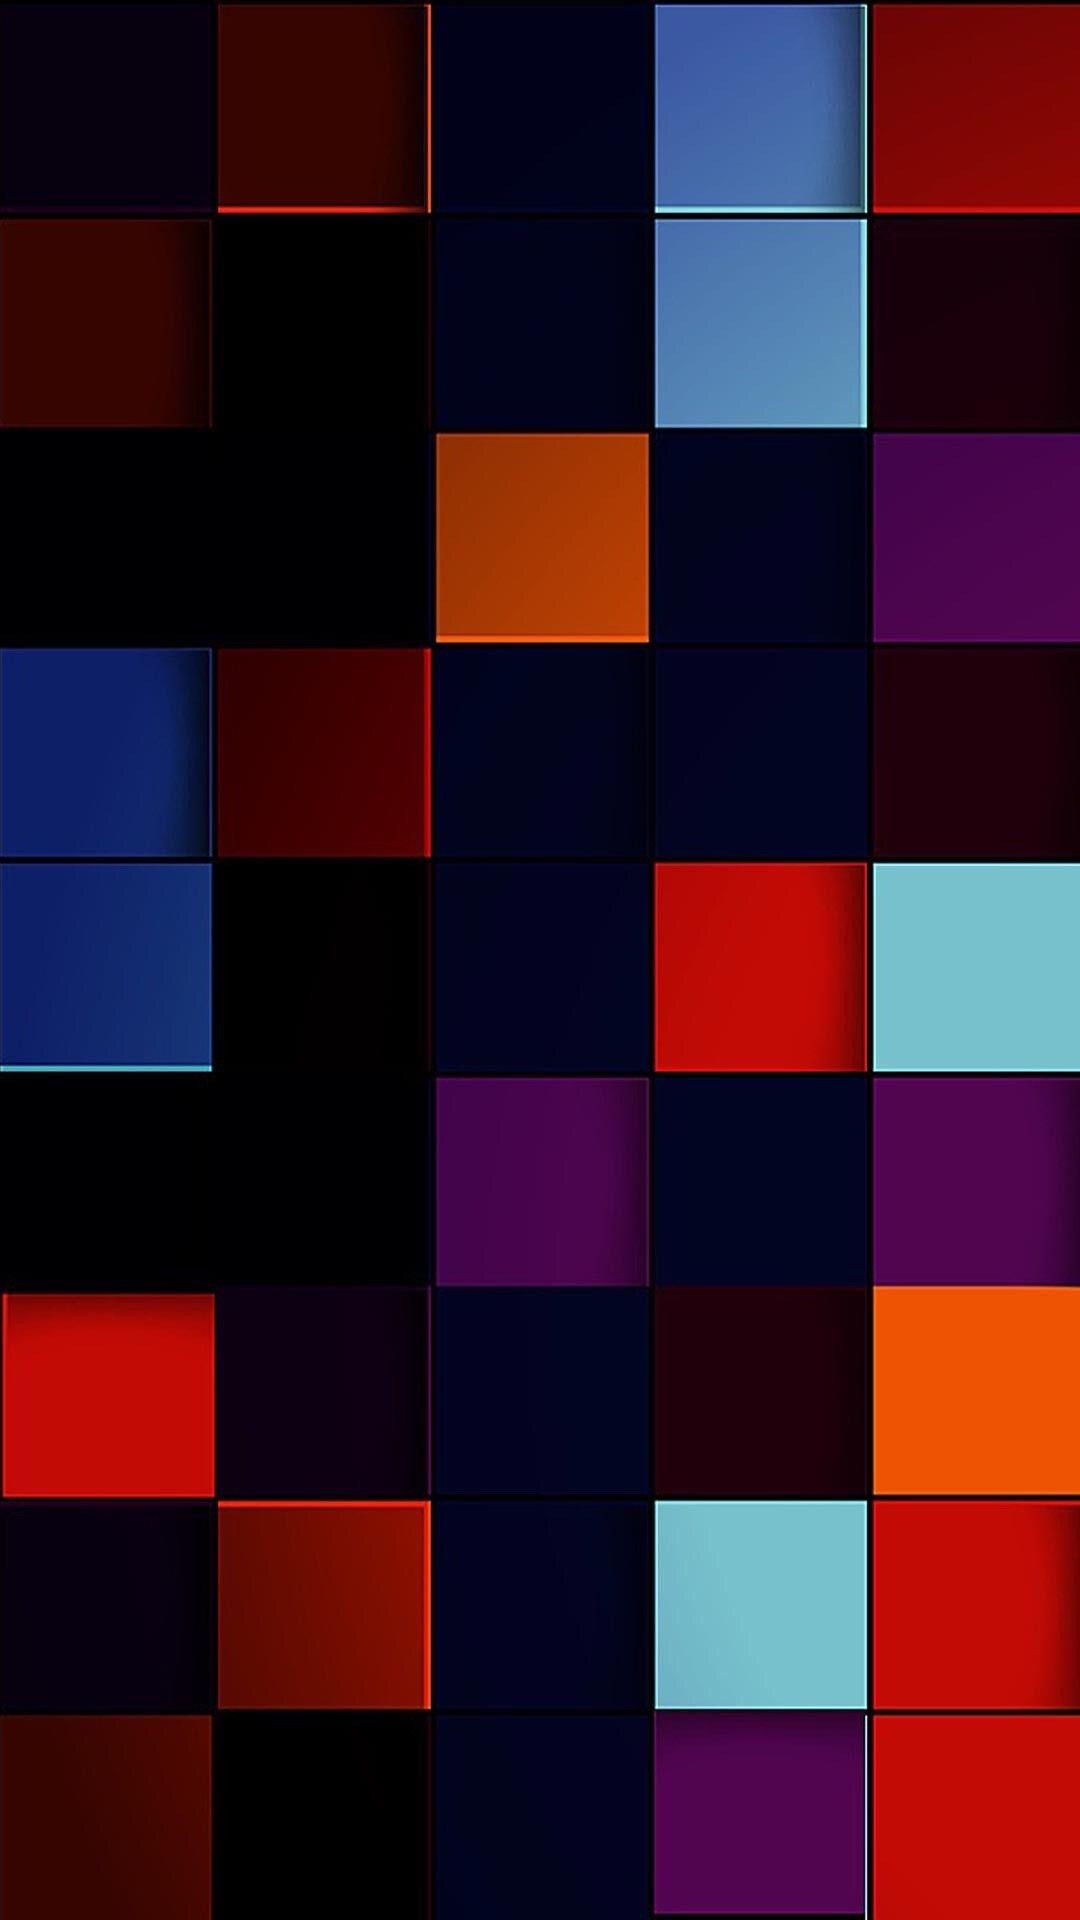 Colorful Geometric Shapes Wallpaper. Geometric shapes wallpaper, Galaxy phone wallpaper, Phone wallpaper design